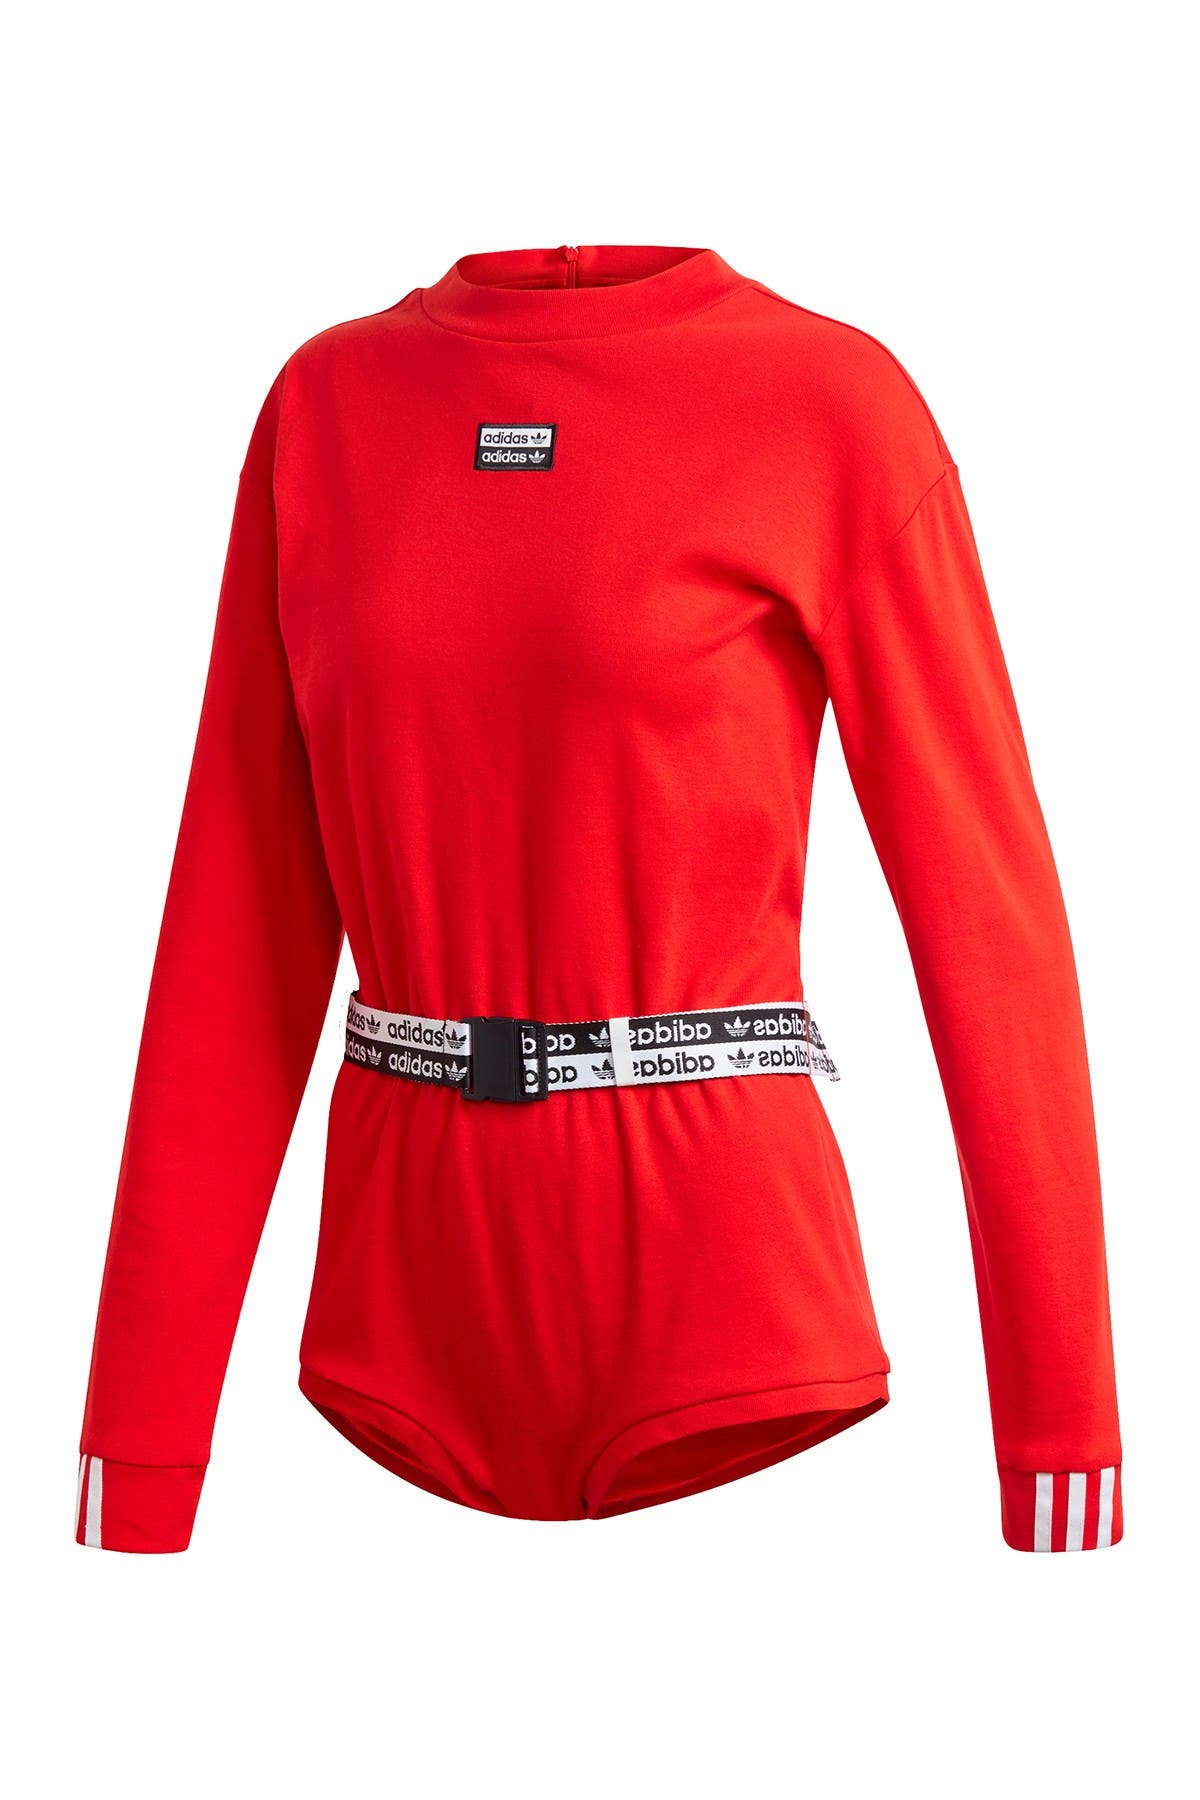 red adidas bodysuit long sleeve